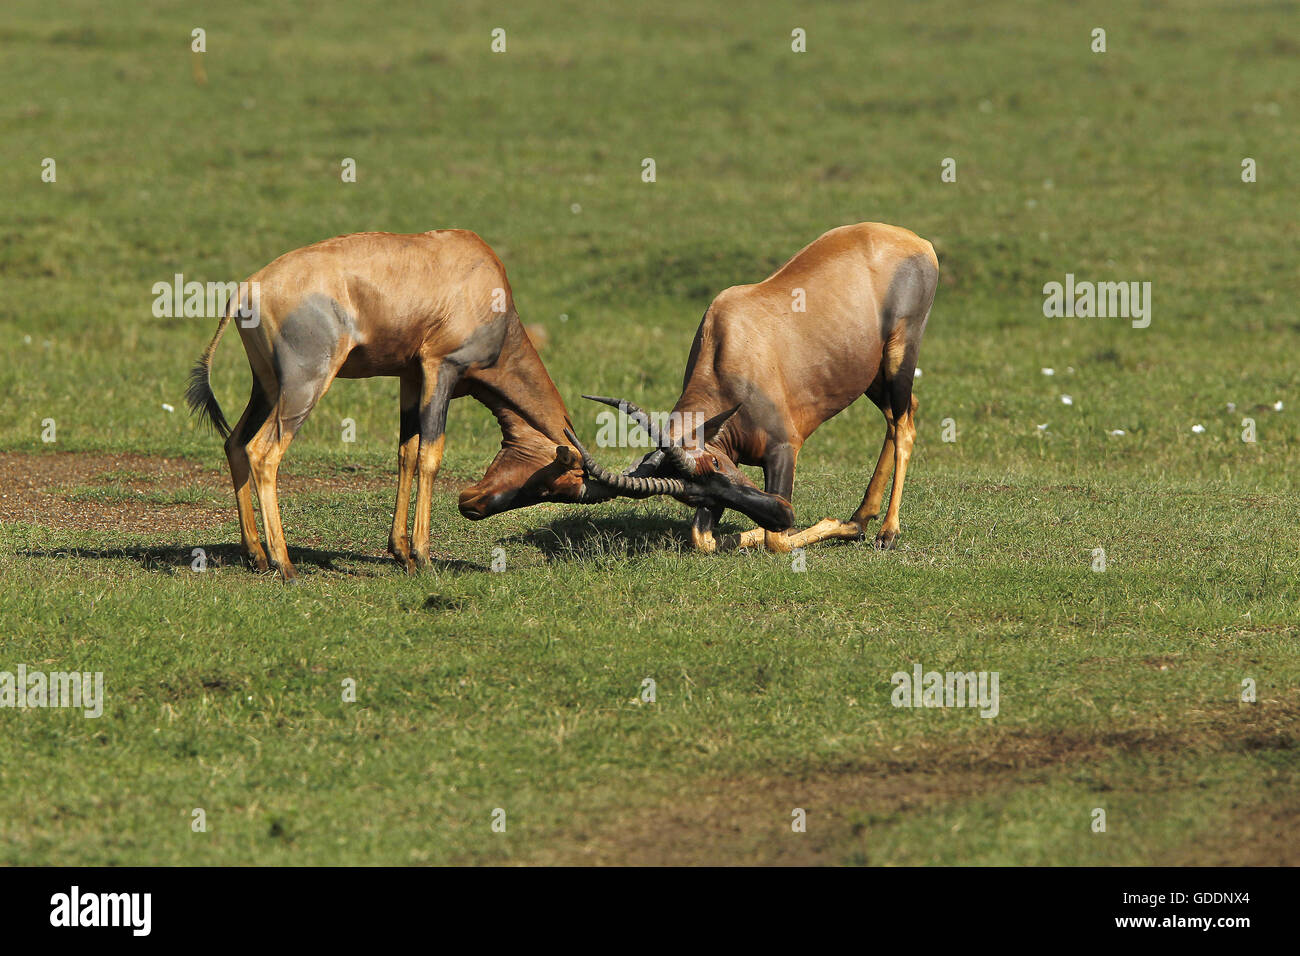 Topi, damaliscus korrigum, Males fighting, Masai Mara Park in Kenya Stock Photo